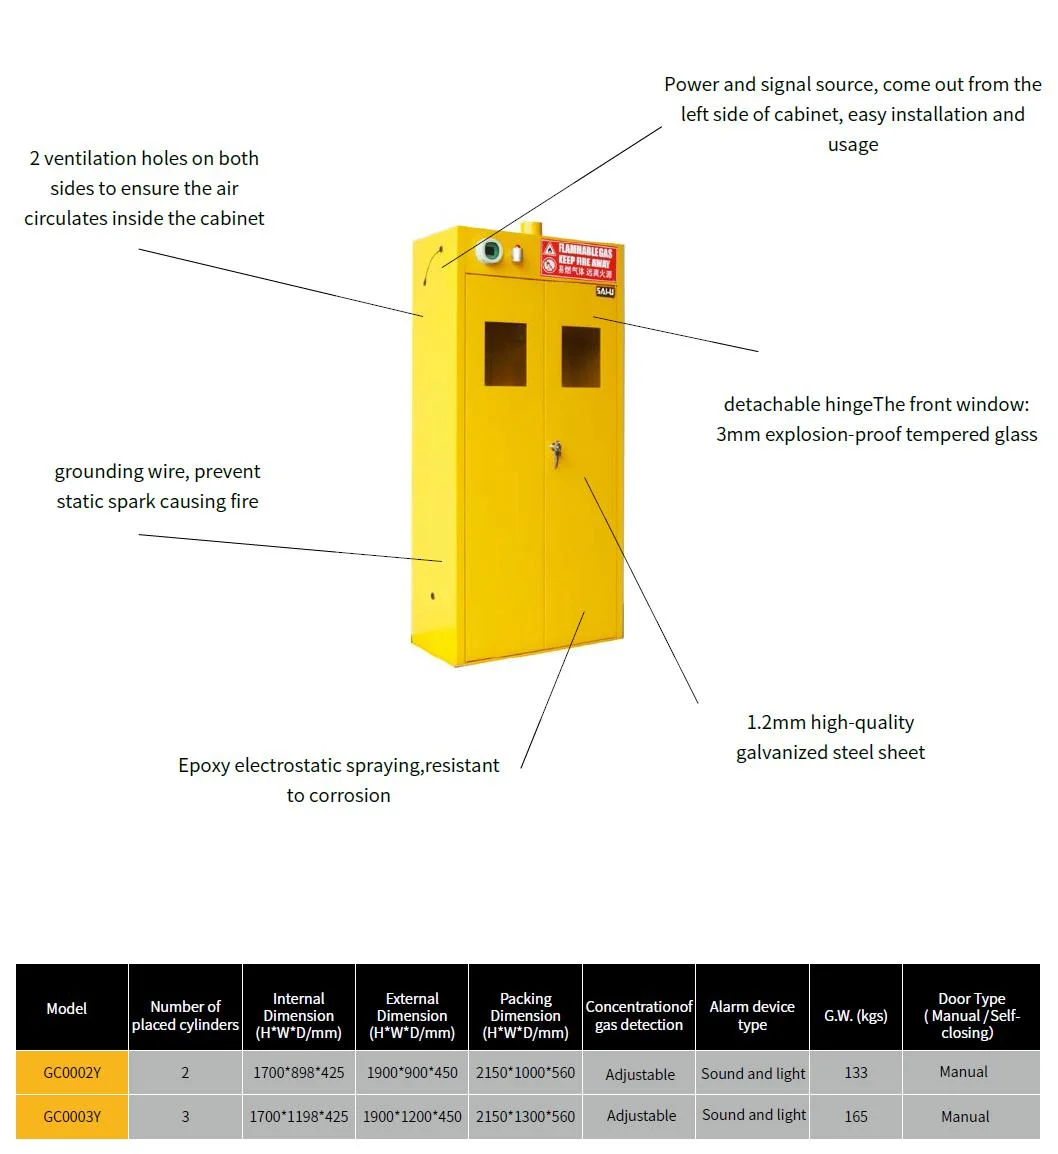 Sai-U Gas Bottle Cylinder Storage Cabinet with Safety Alarm Device